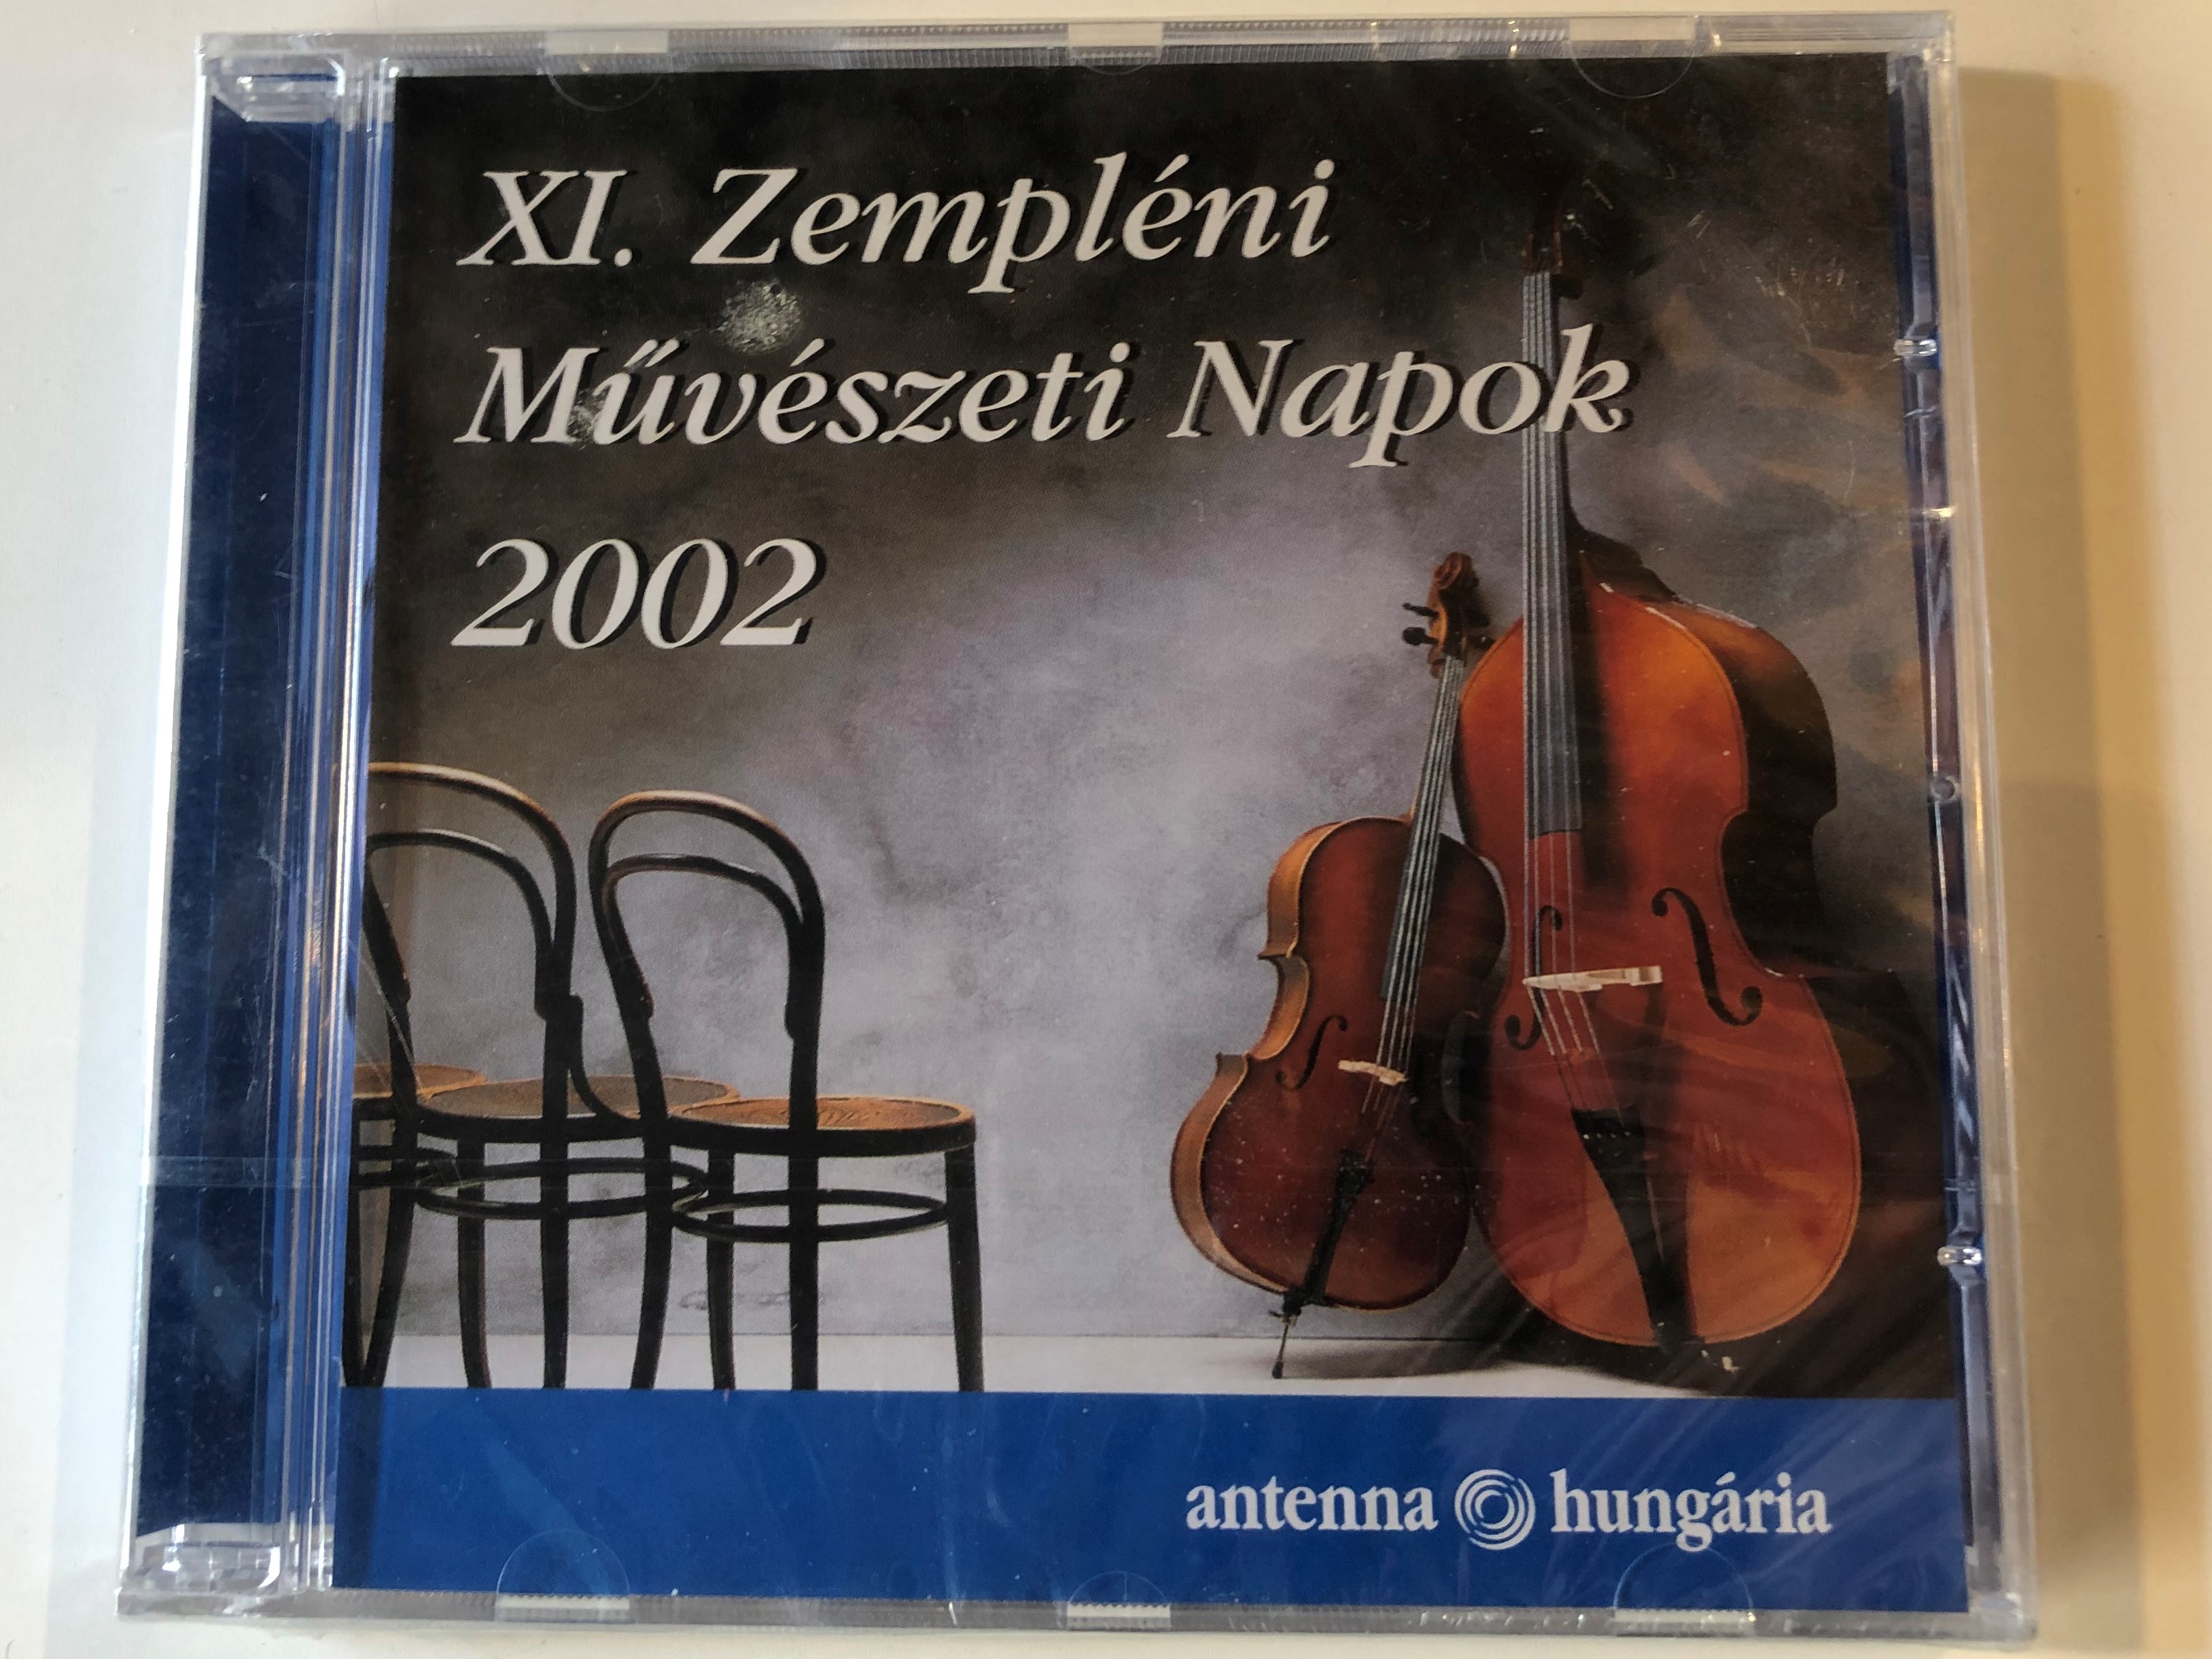 xi.-zempleni-muveszeti-napok-2002-antenna-hung-ria-audio-cd-2002-zmn-2002-1-.jpg